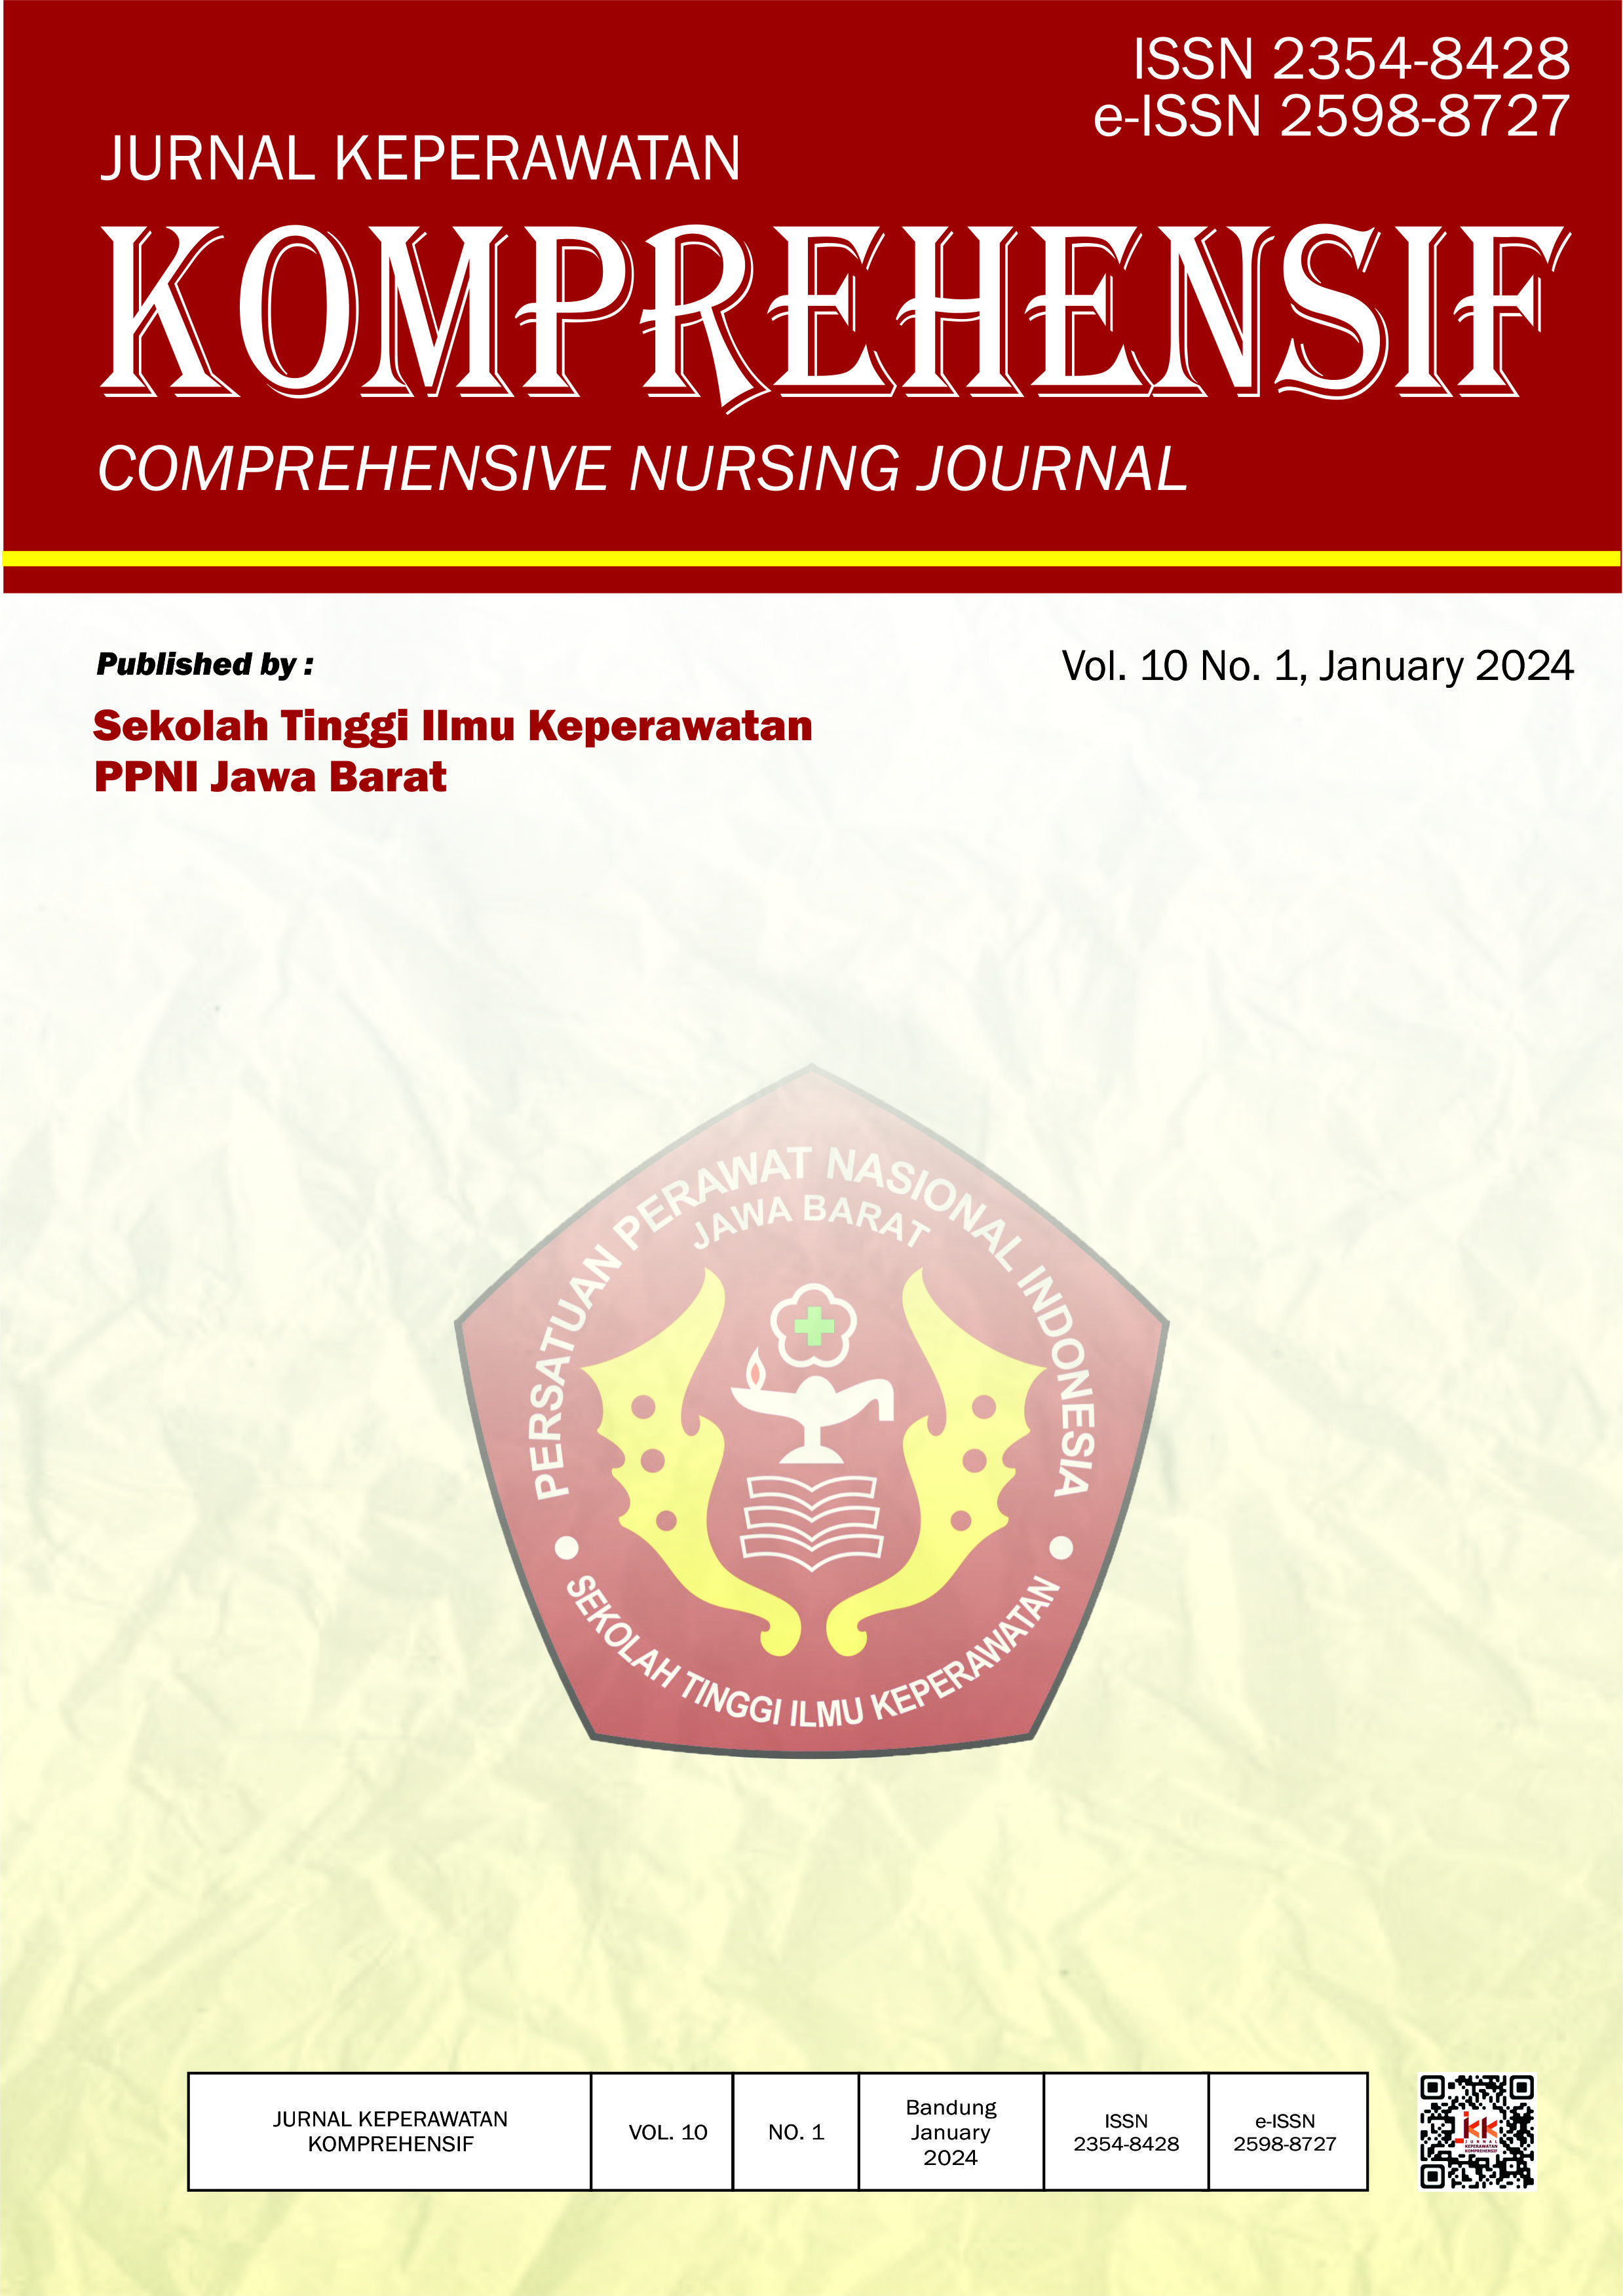 					View Vol. 10 No. 1 (2024): JURNAL KEPERAWATAN KOMPREHENSIF (COMPREHENSIVE NURSING JOURNAL)
				